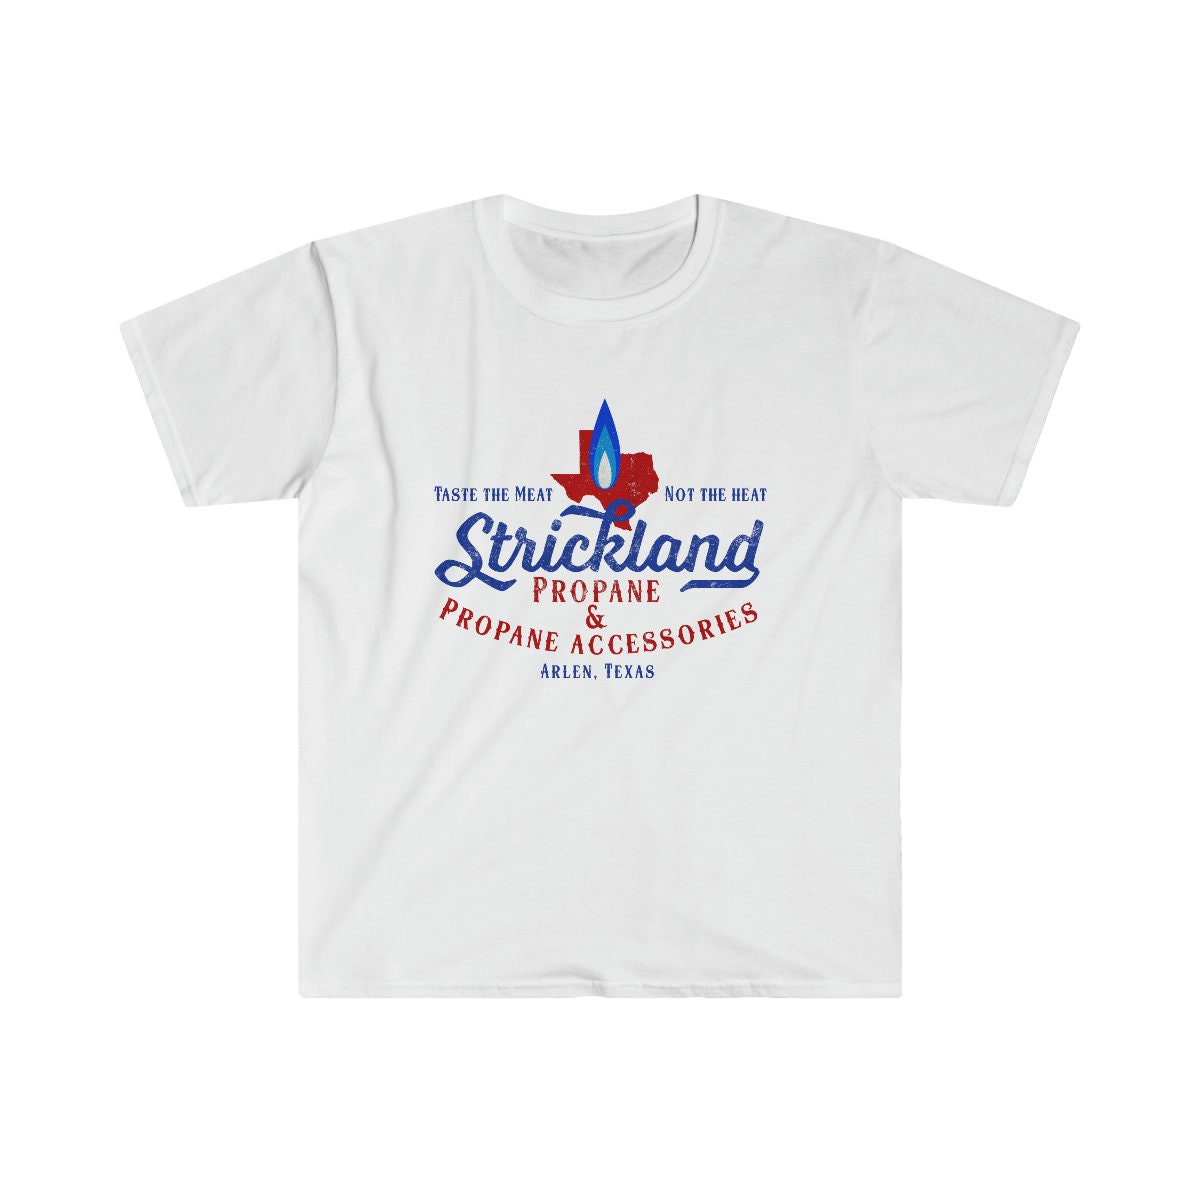 Strickland propane shirt for sale  